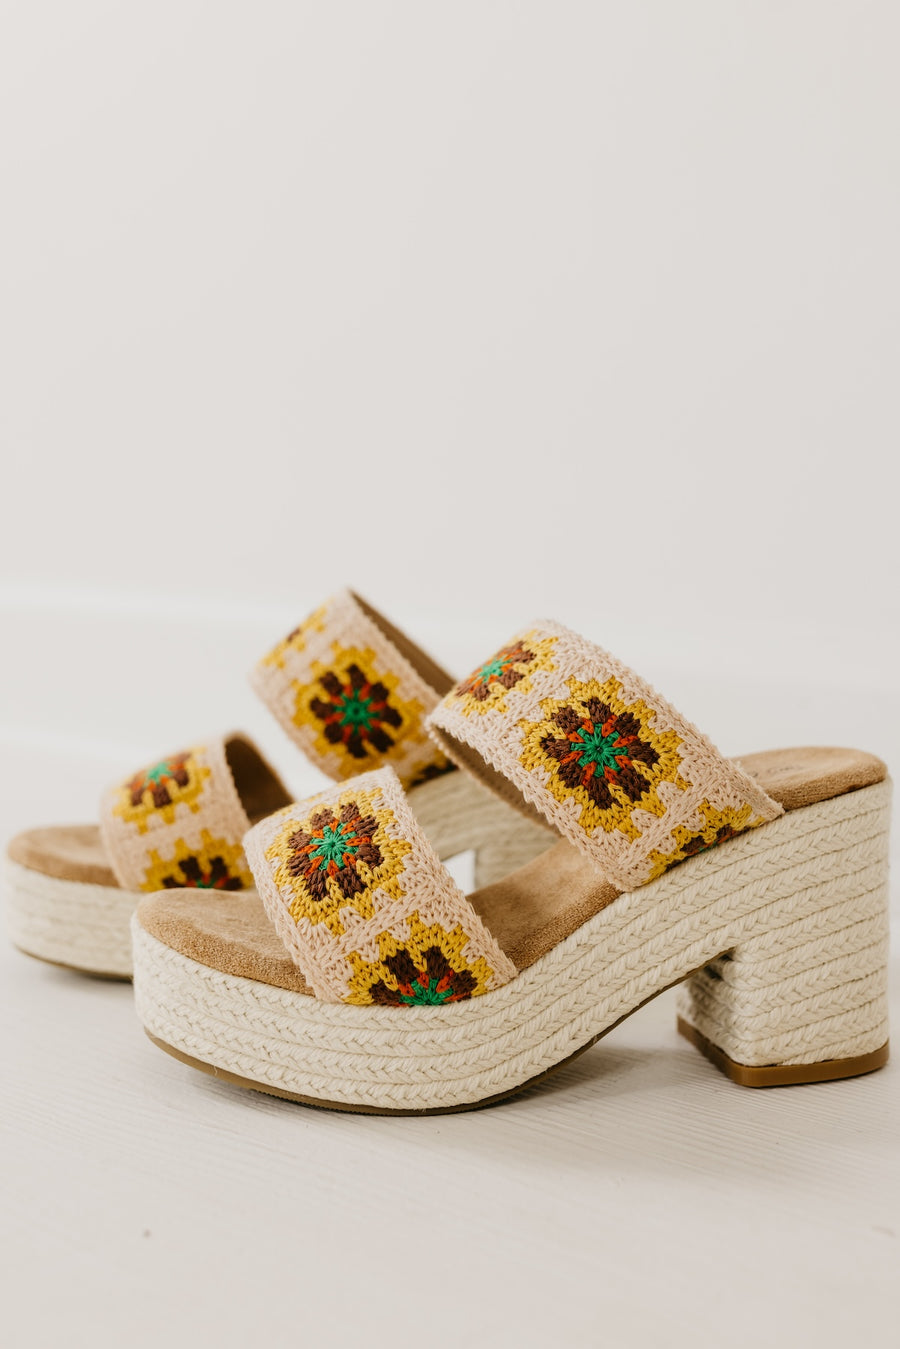 The Shirin Floral Crochet Platform Heel